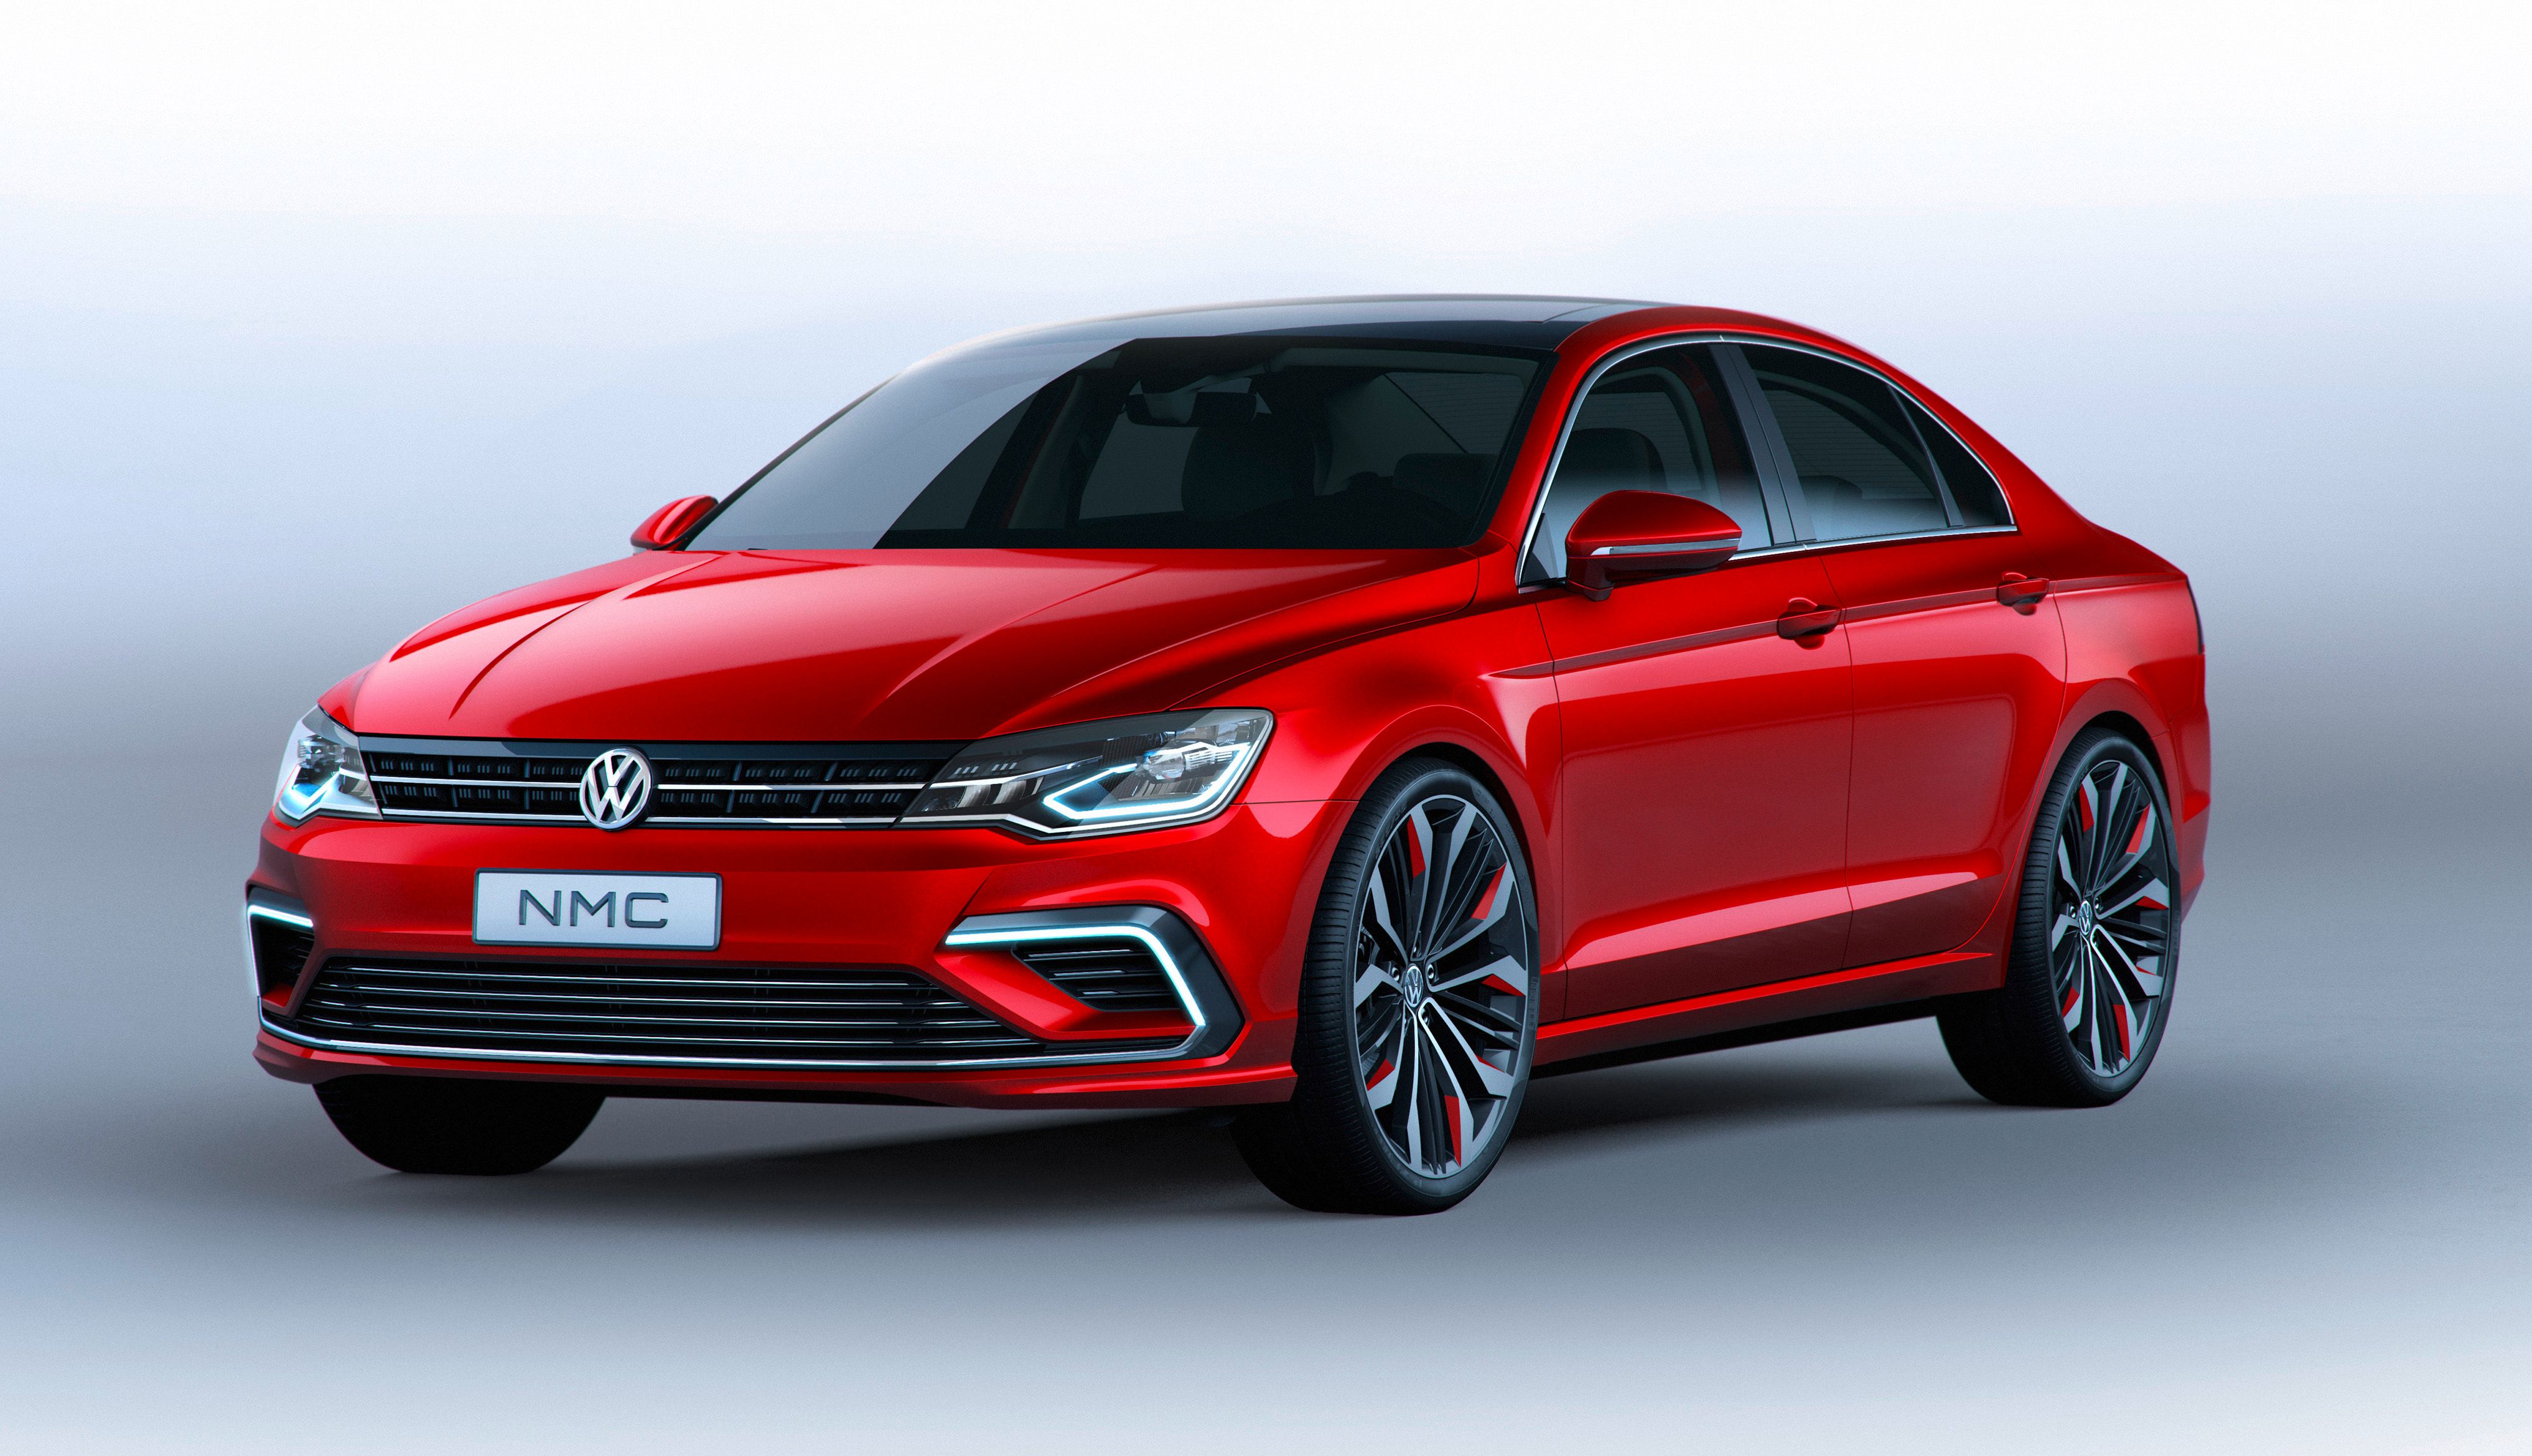 2014 Volkswagen New Midsize Coupe Concept